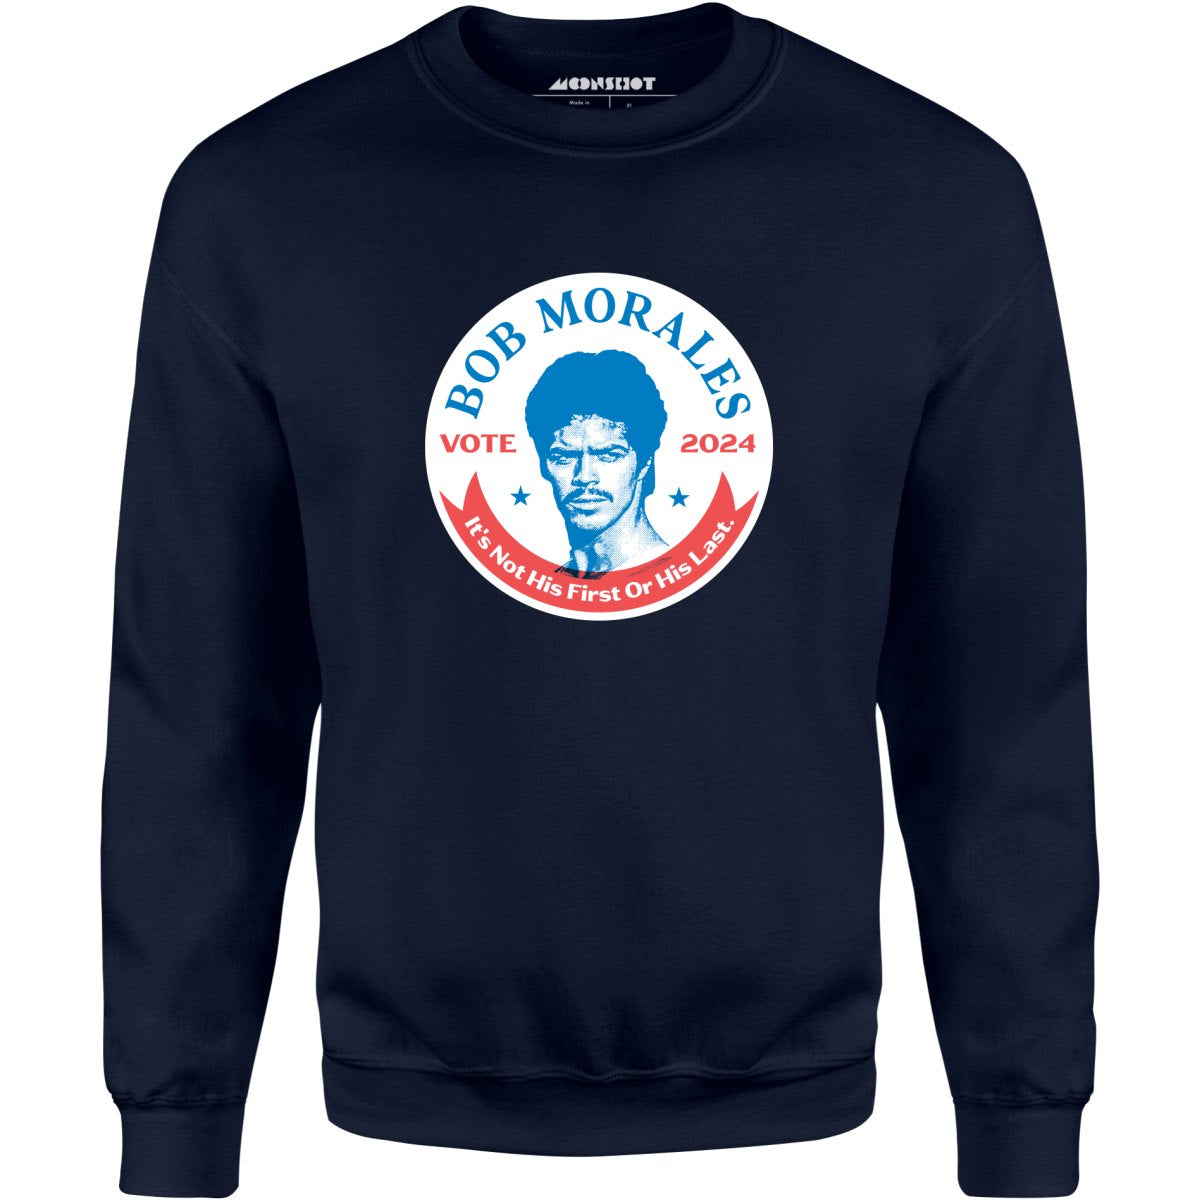 Bob Morales 2024 - Unisex Sweatshirt